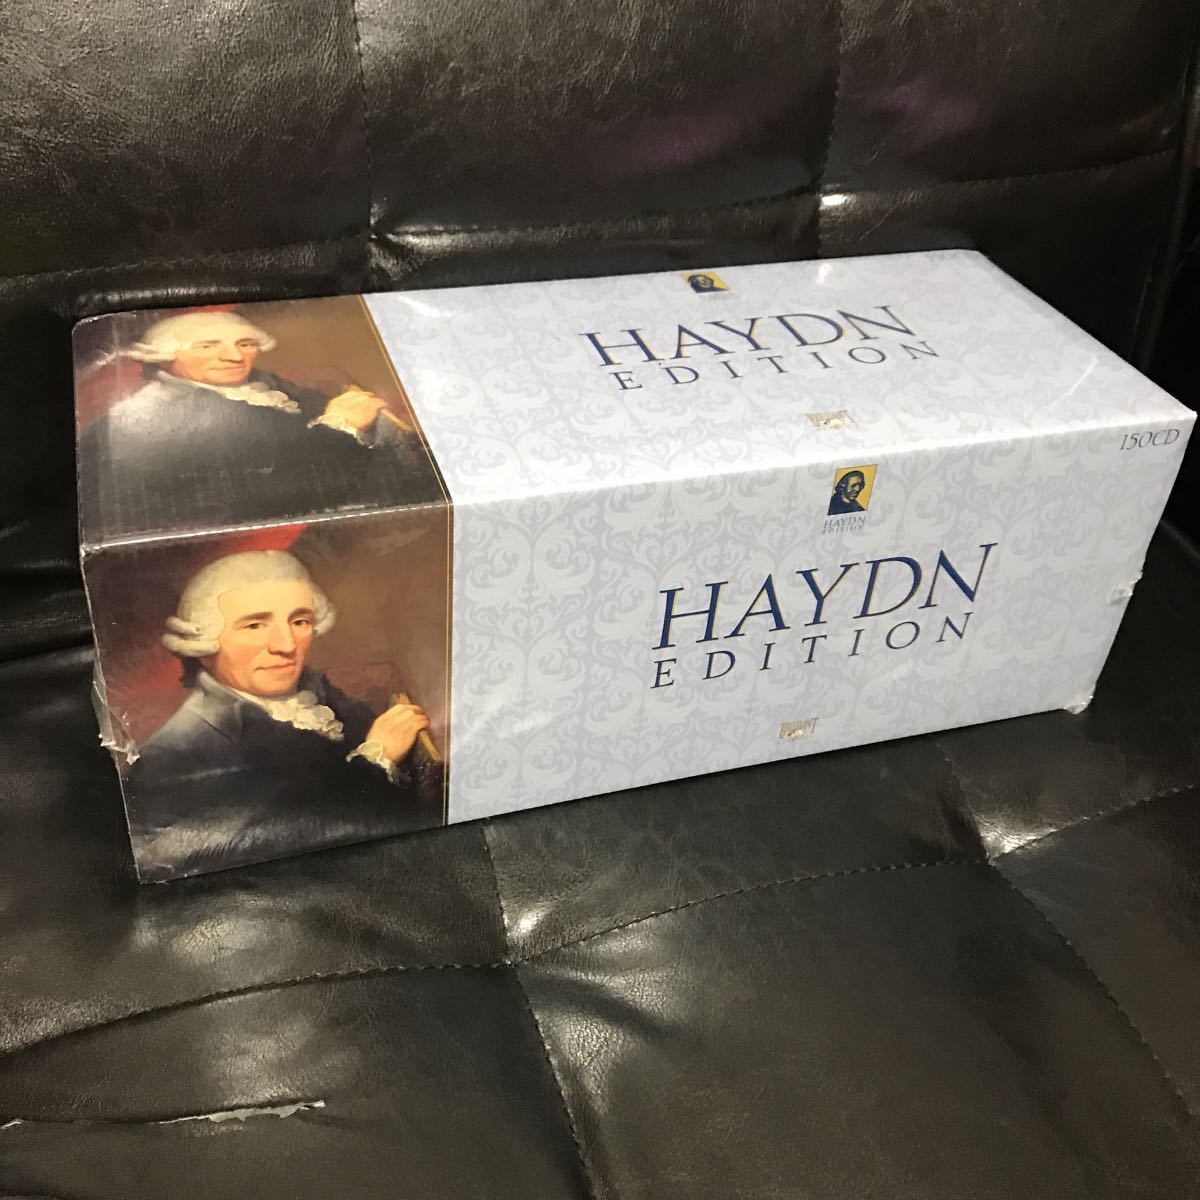 Yahoo!オークション -「haydn edition」(CD) の落札相場・落札価格